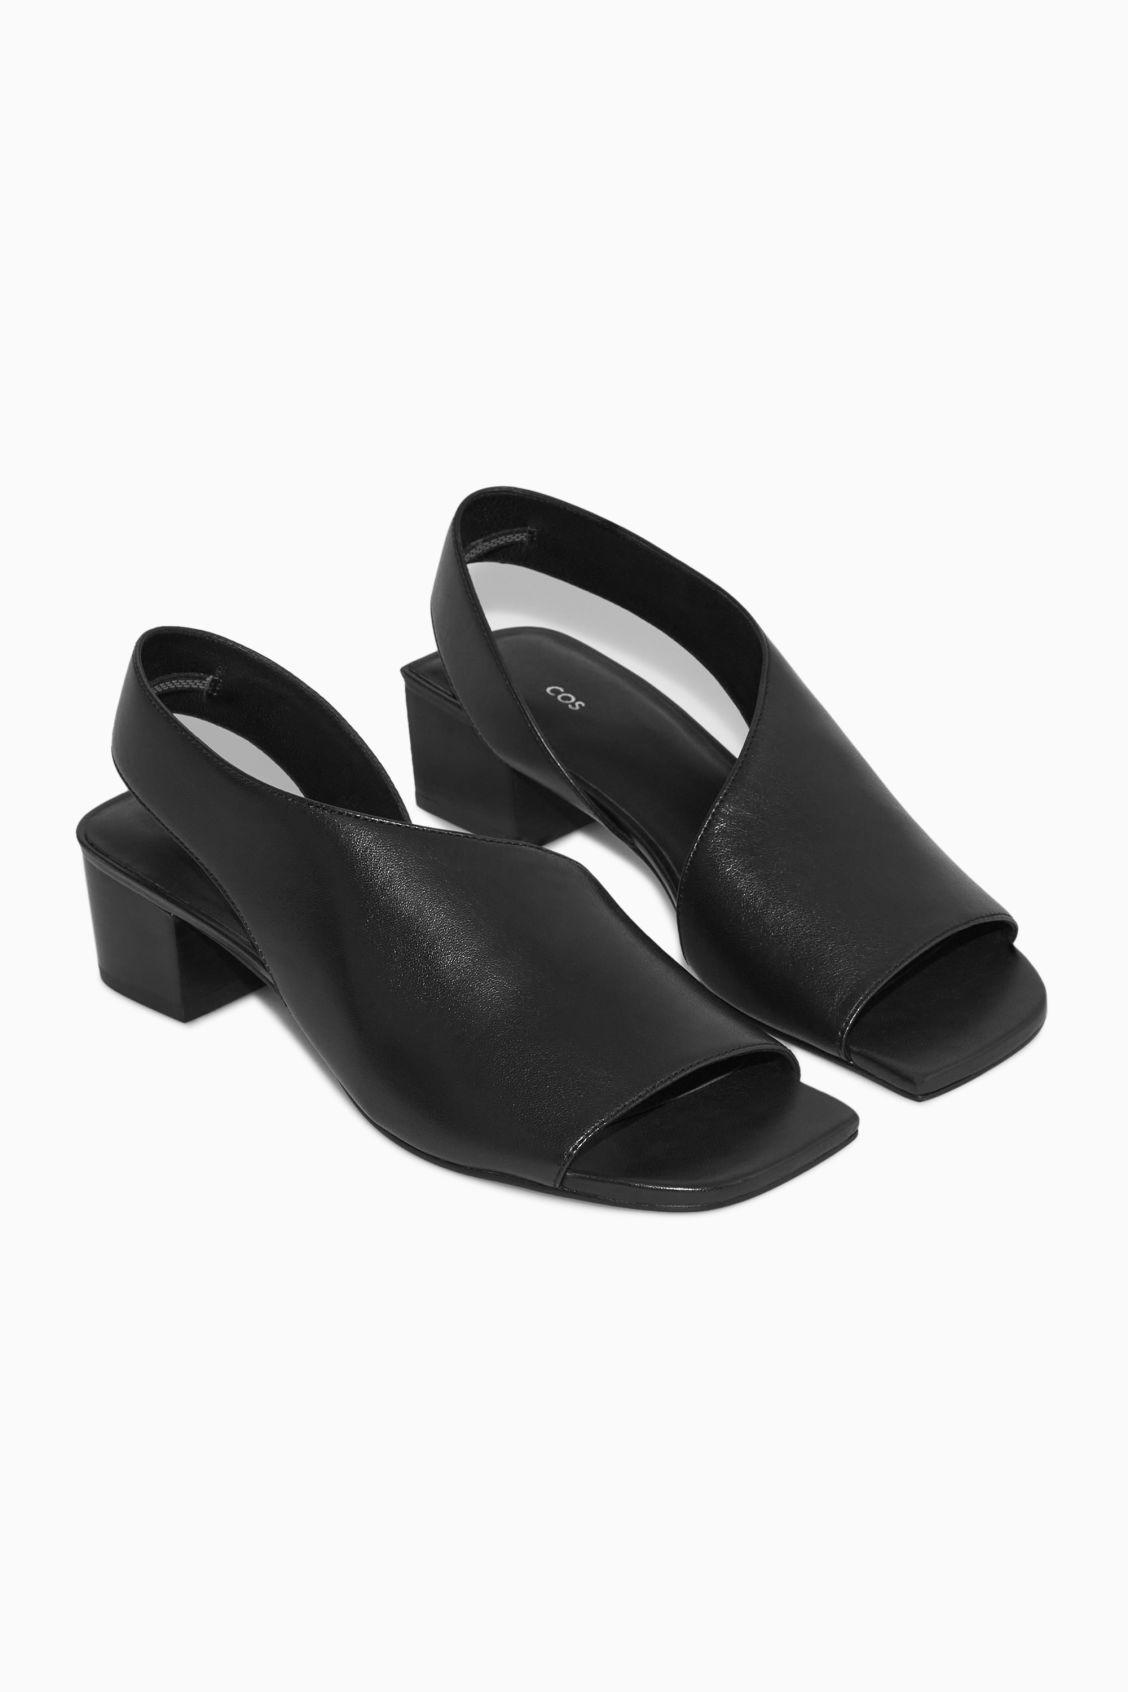 COS Leather Slingback Block-heel Sandals in Black | Lyst